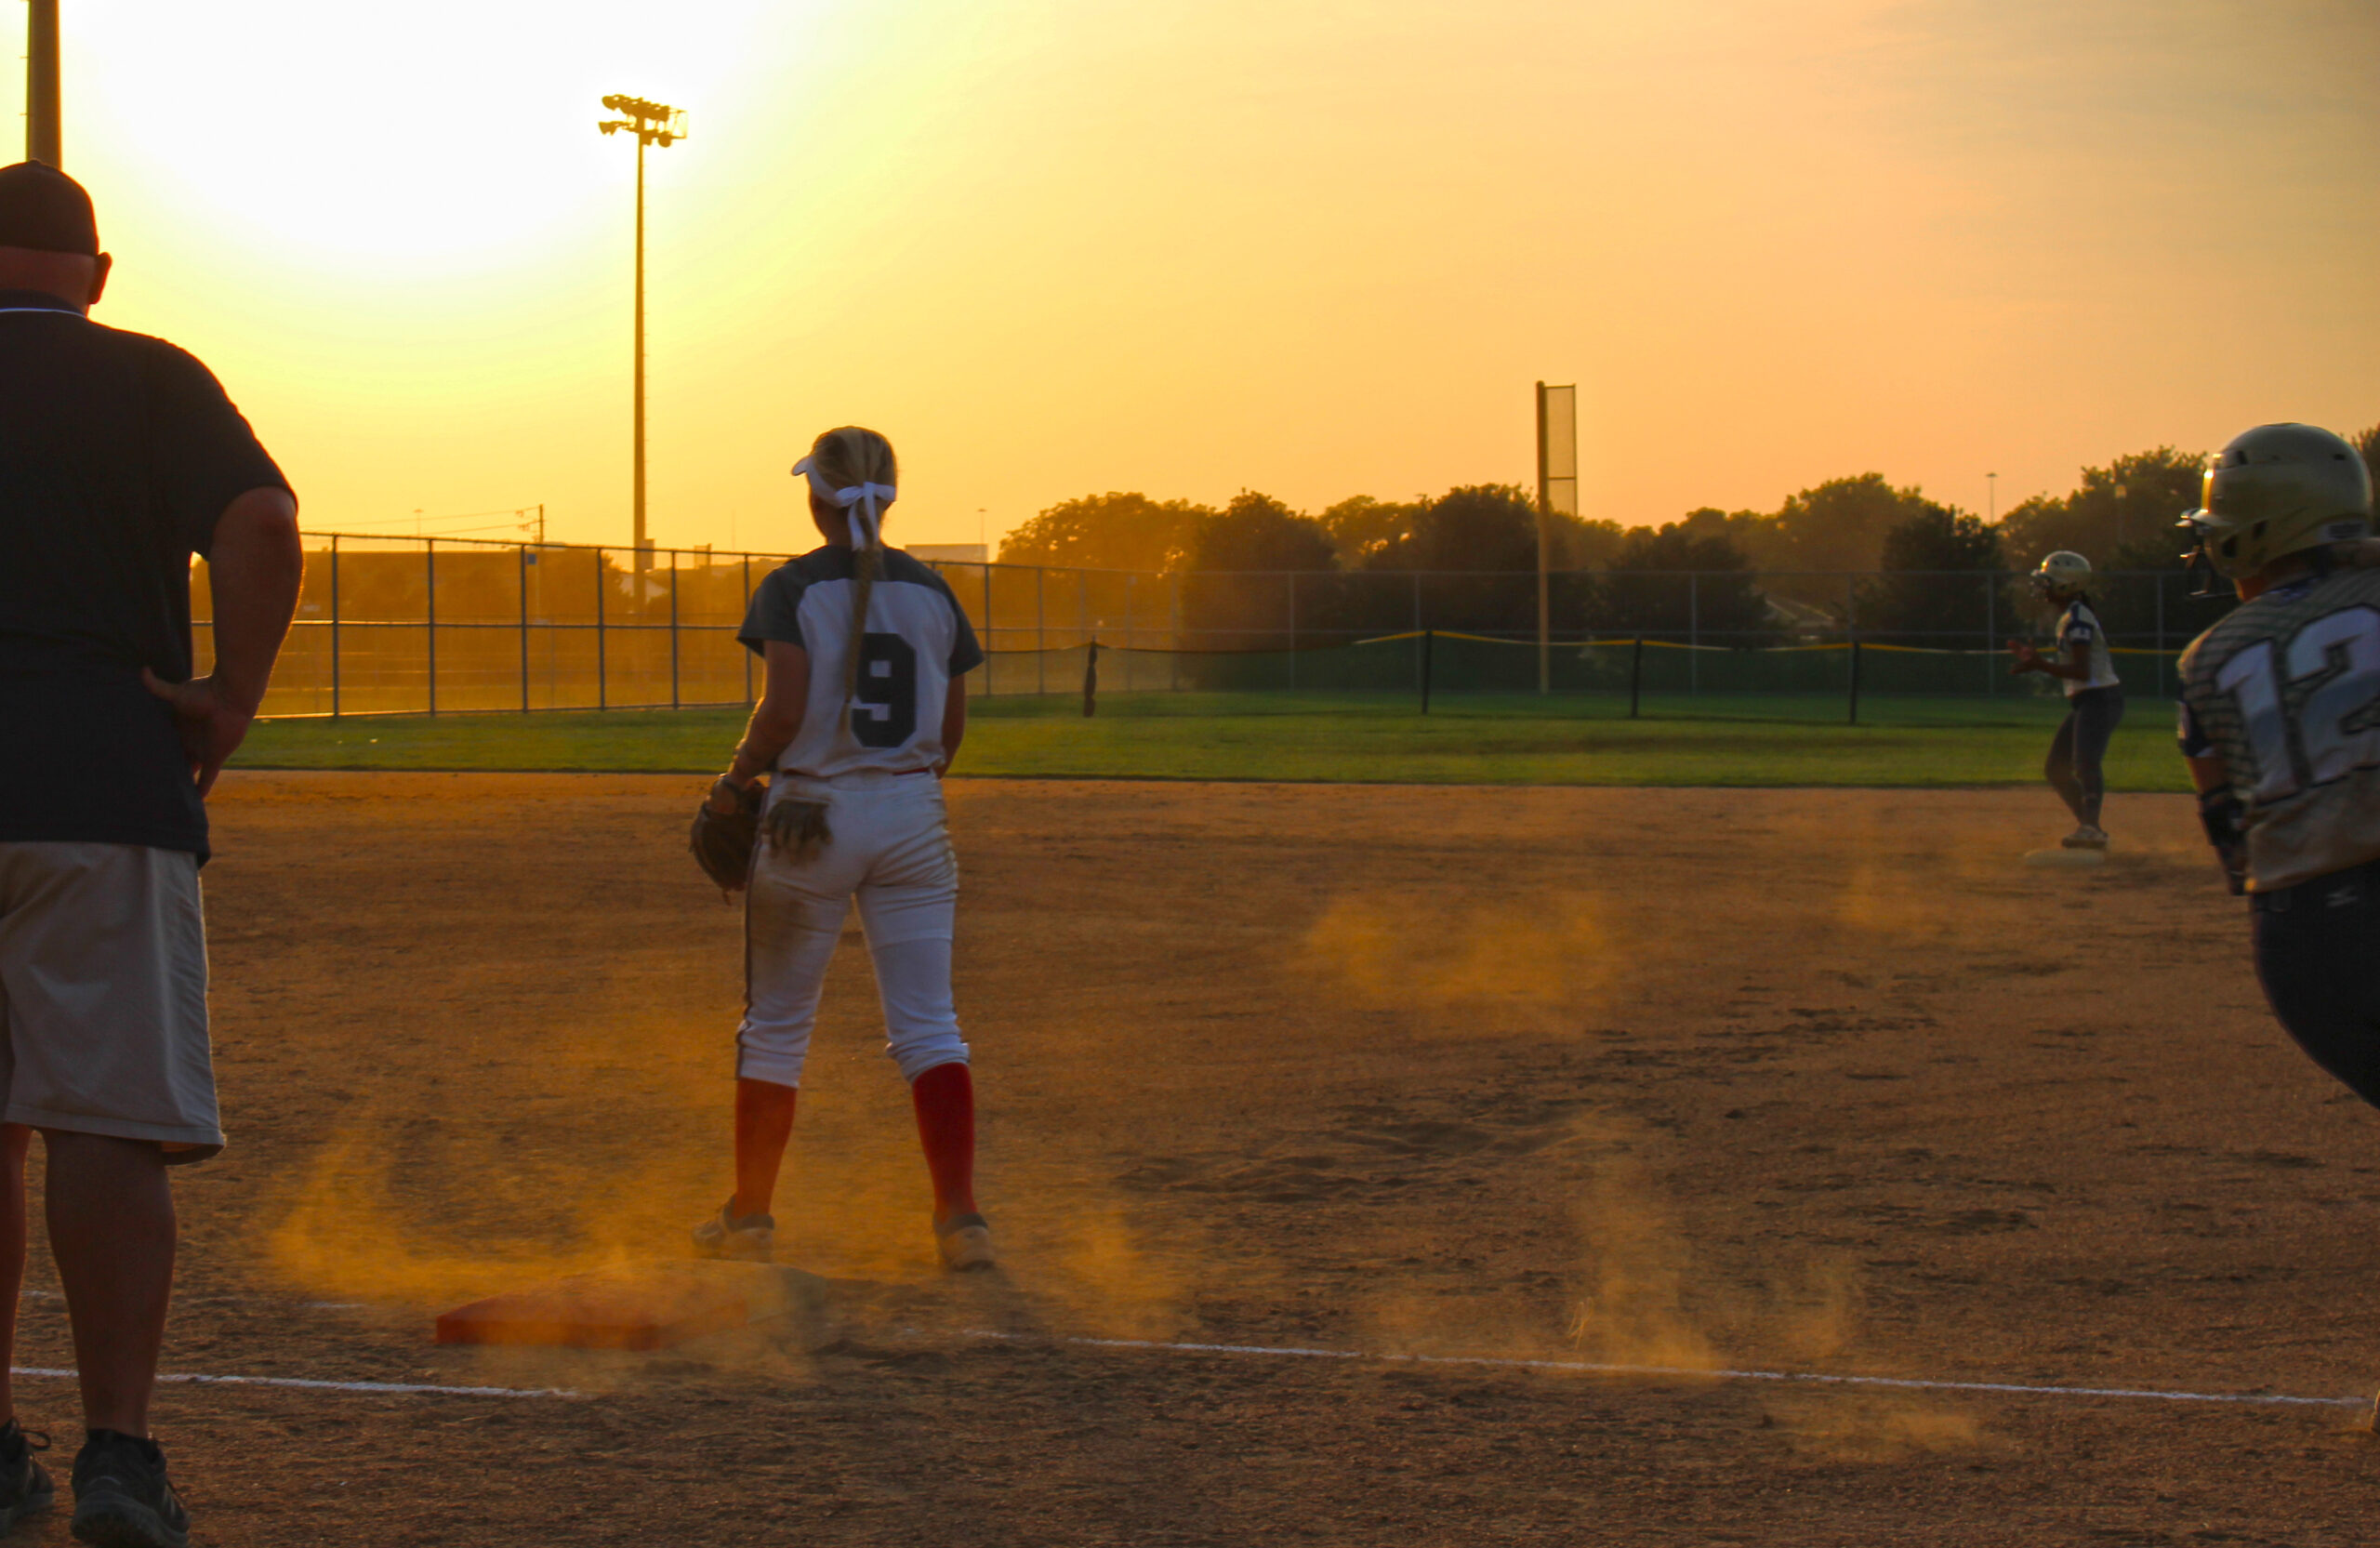 USA Softball sunset and dust